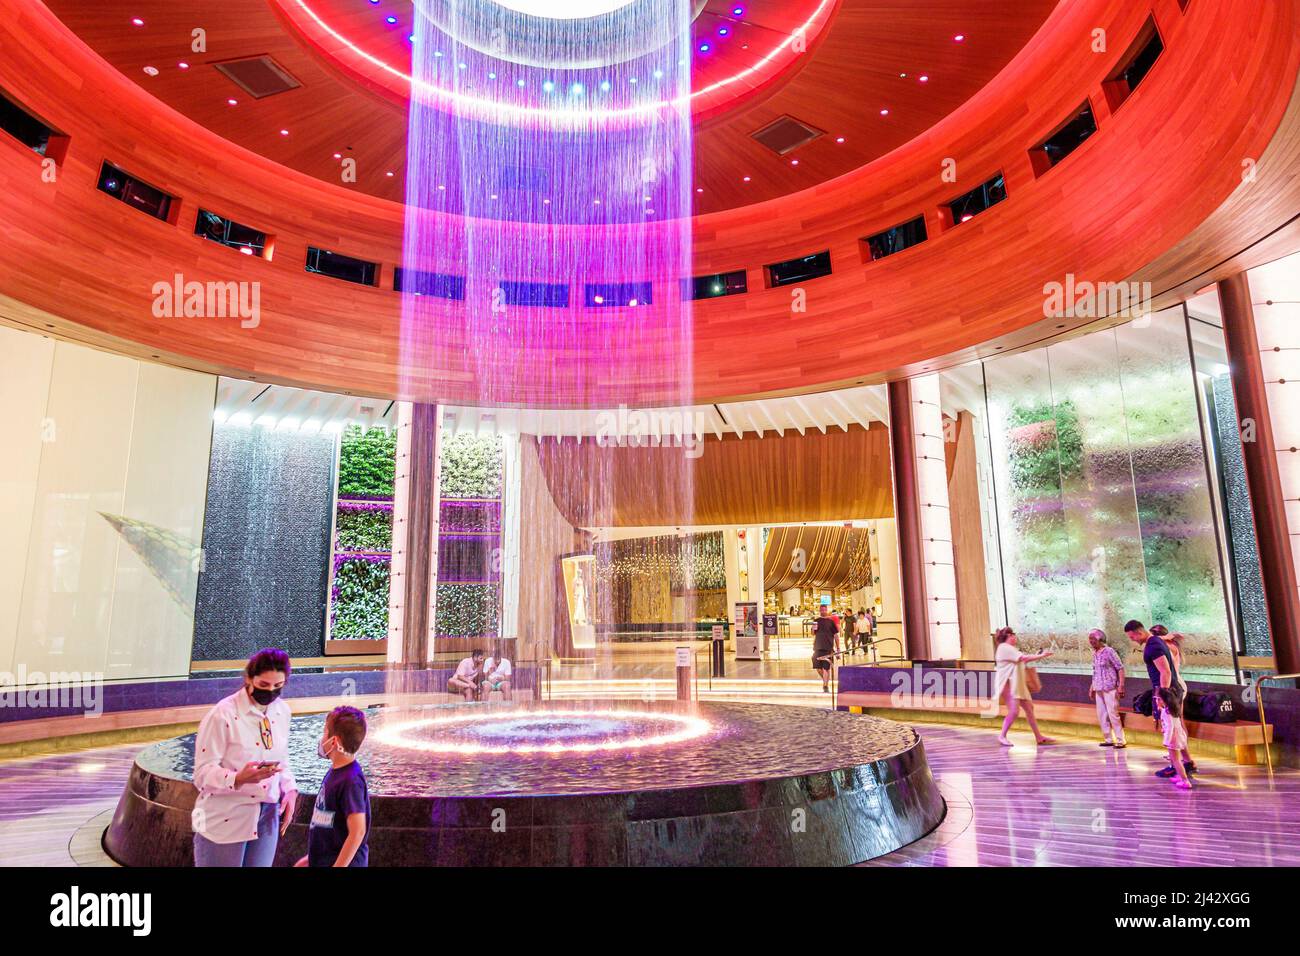 Hollywood Florida Seminole Hard Rock Hotel & Casino Tribe Tribal Reservation im Inneren der Oculus Wasserfall kreisförmigen Brunnen Licht Show l Stockfoto